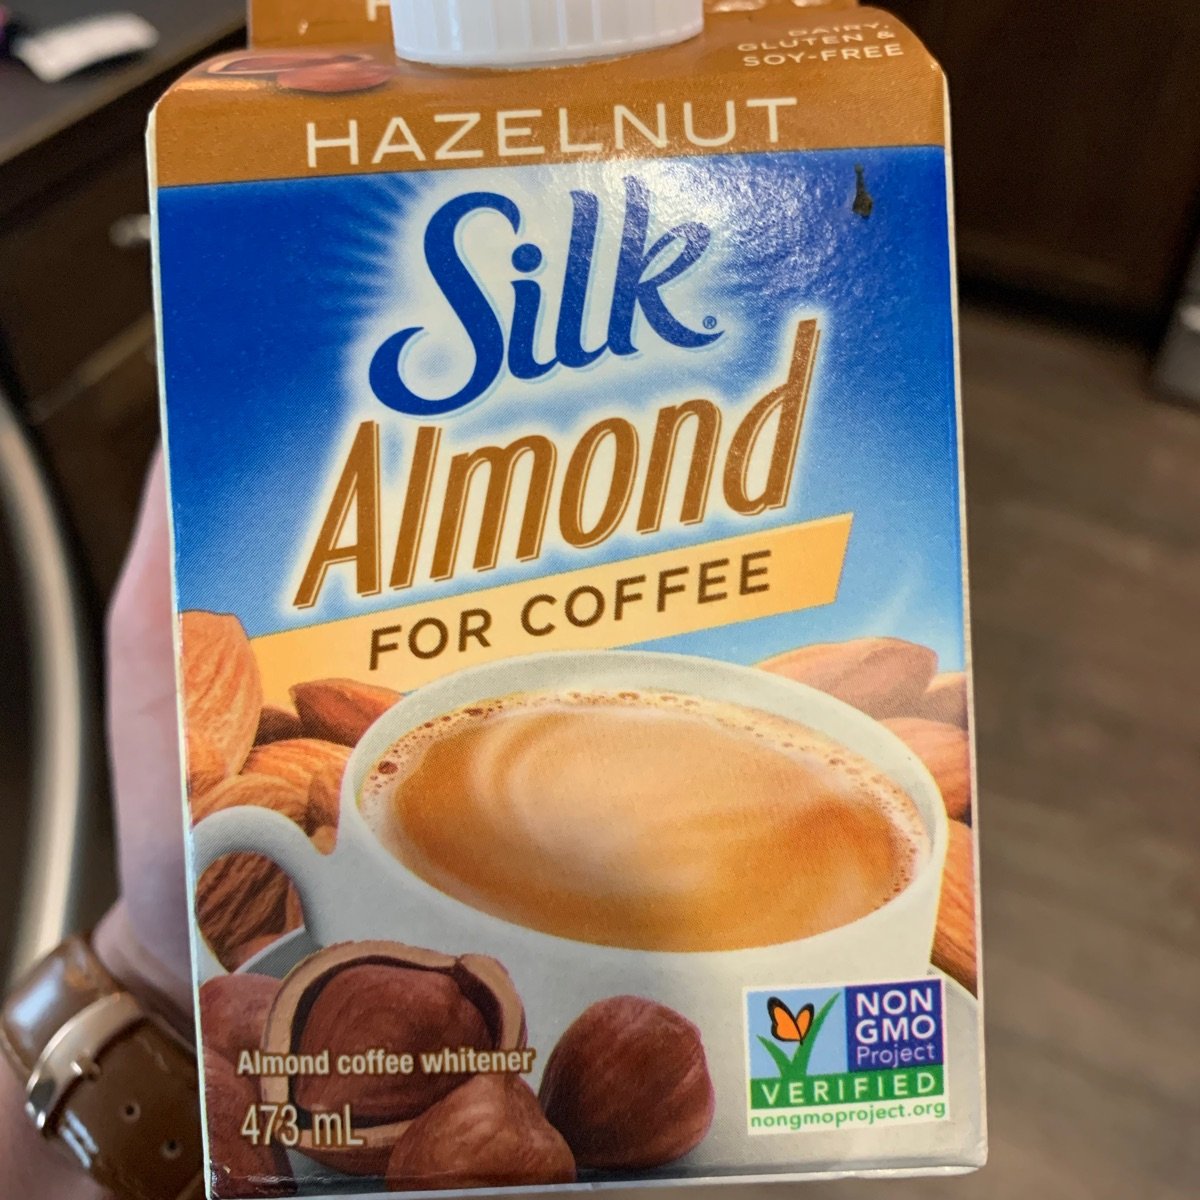 Silk Creamer Almond Hazelnut 473ml